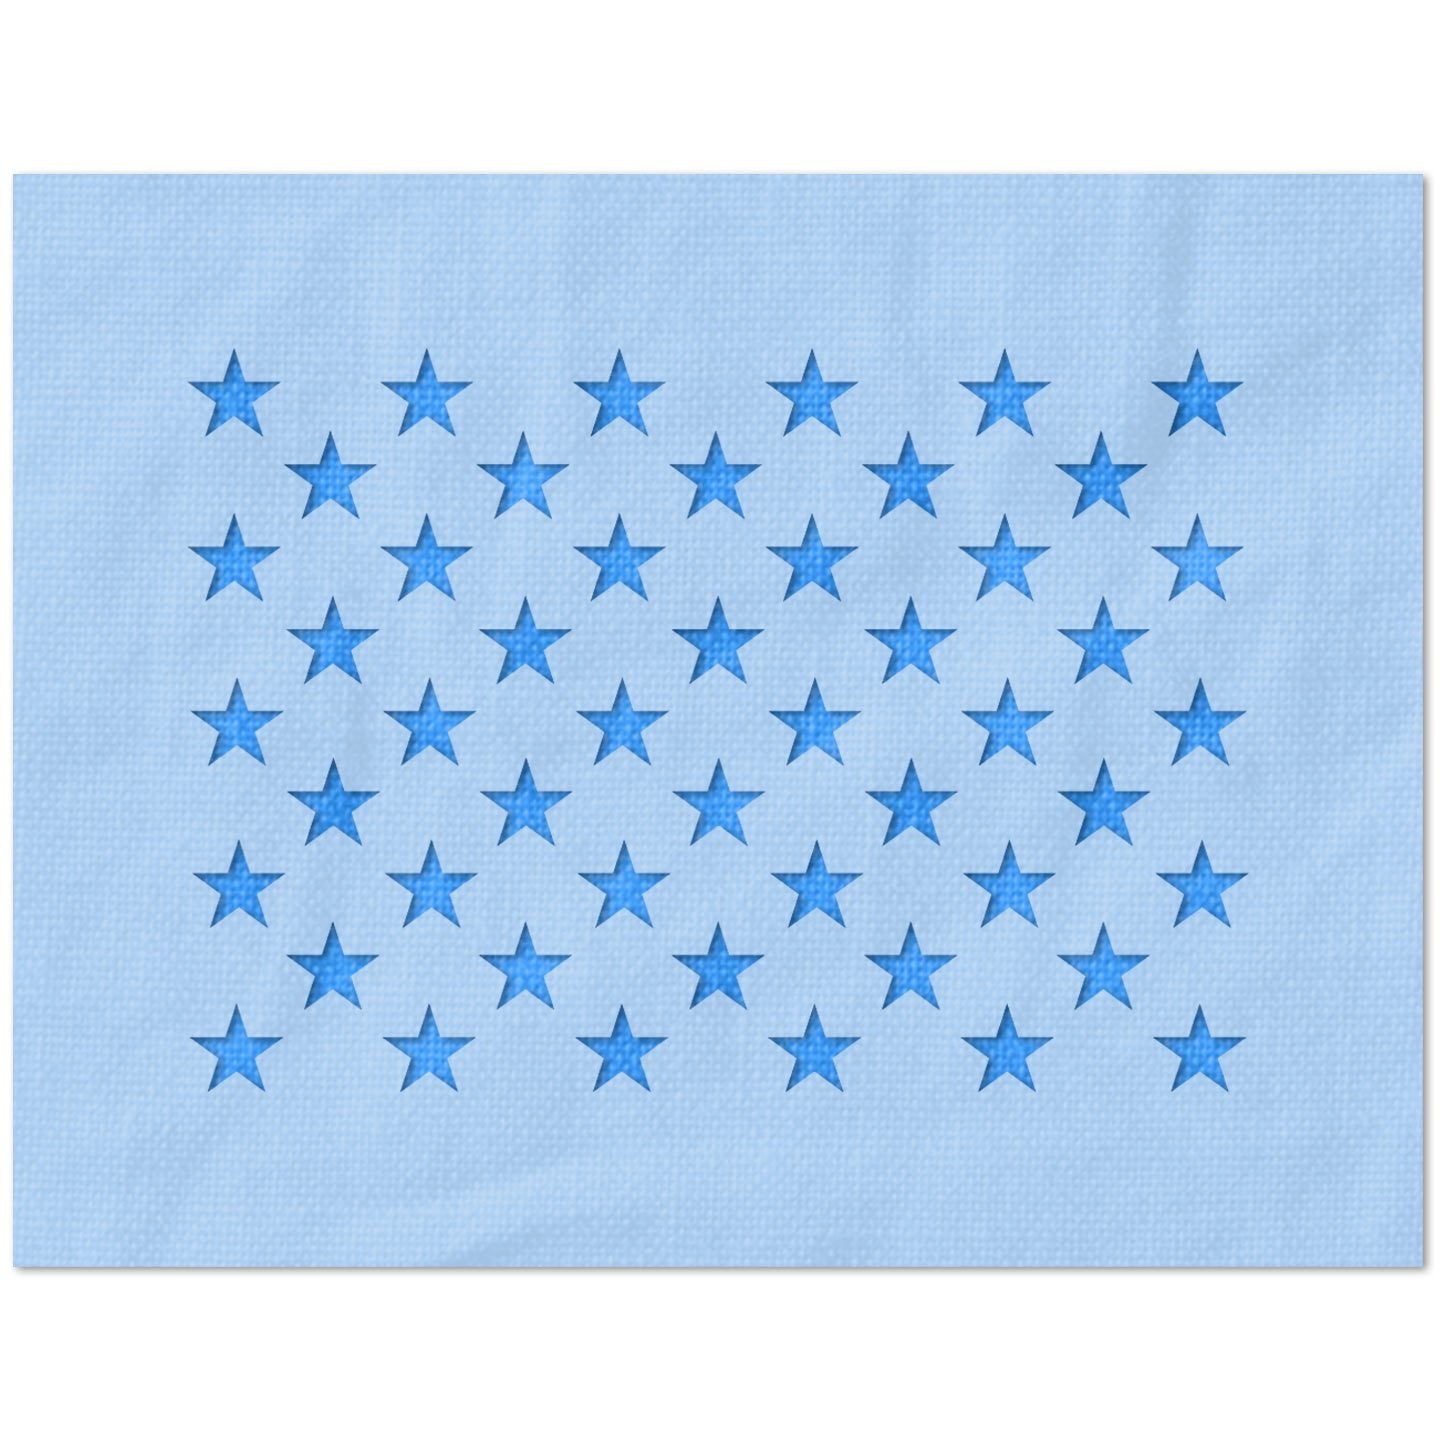  Star Stencil American Flag Star Stencil 50 Stars